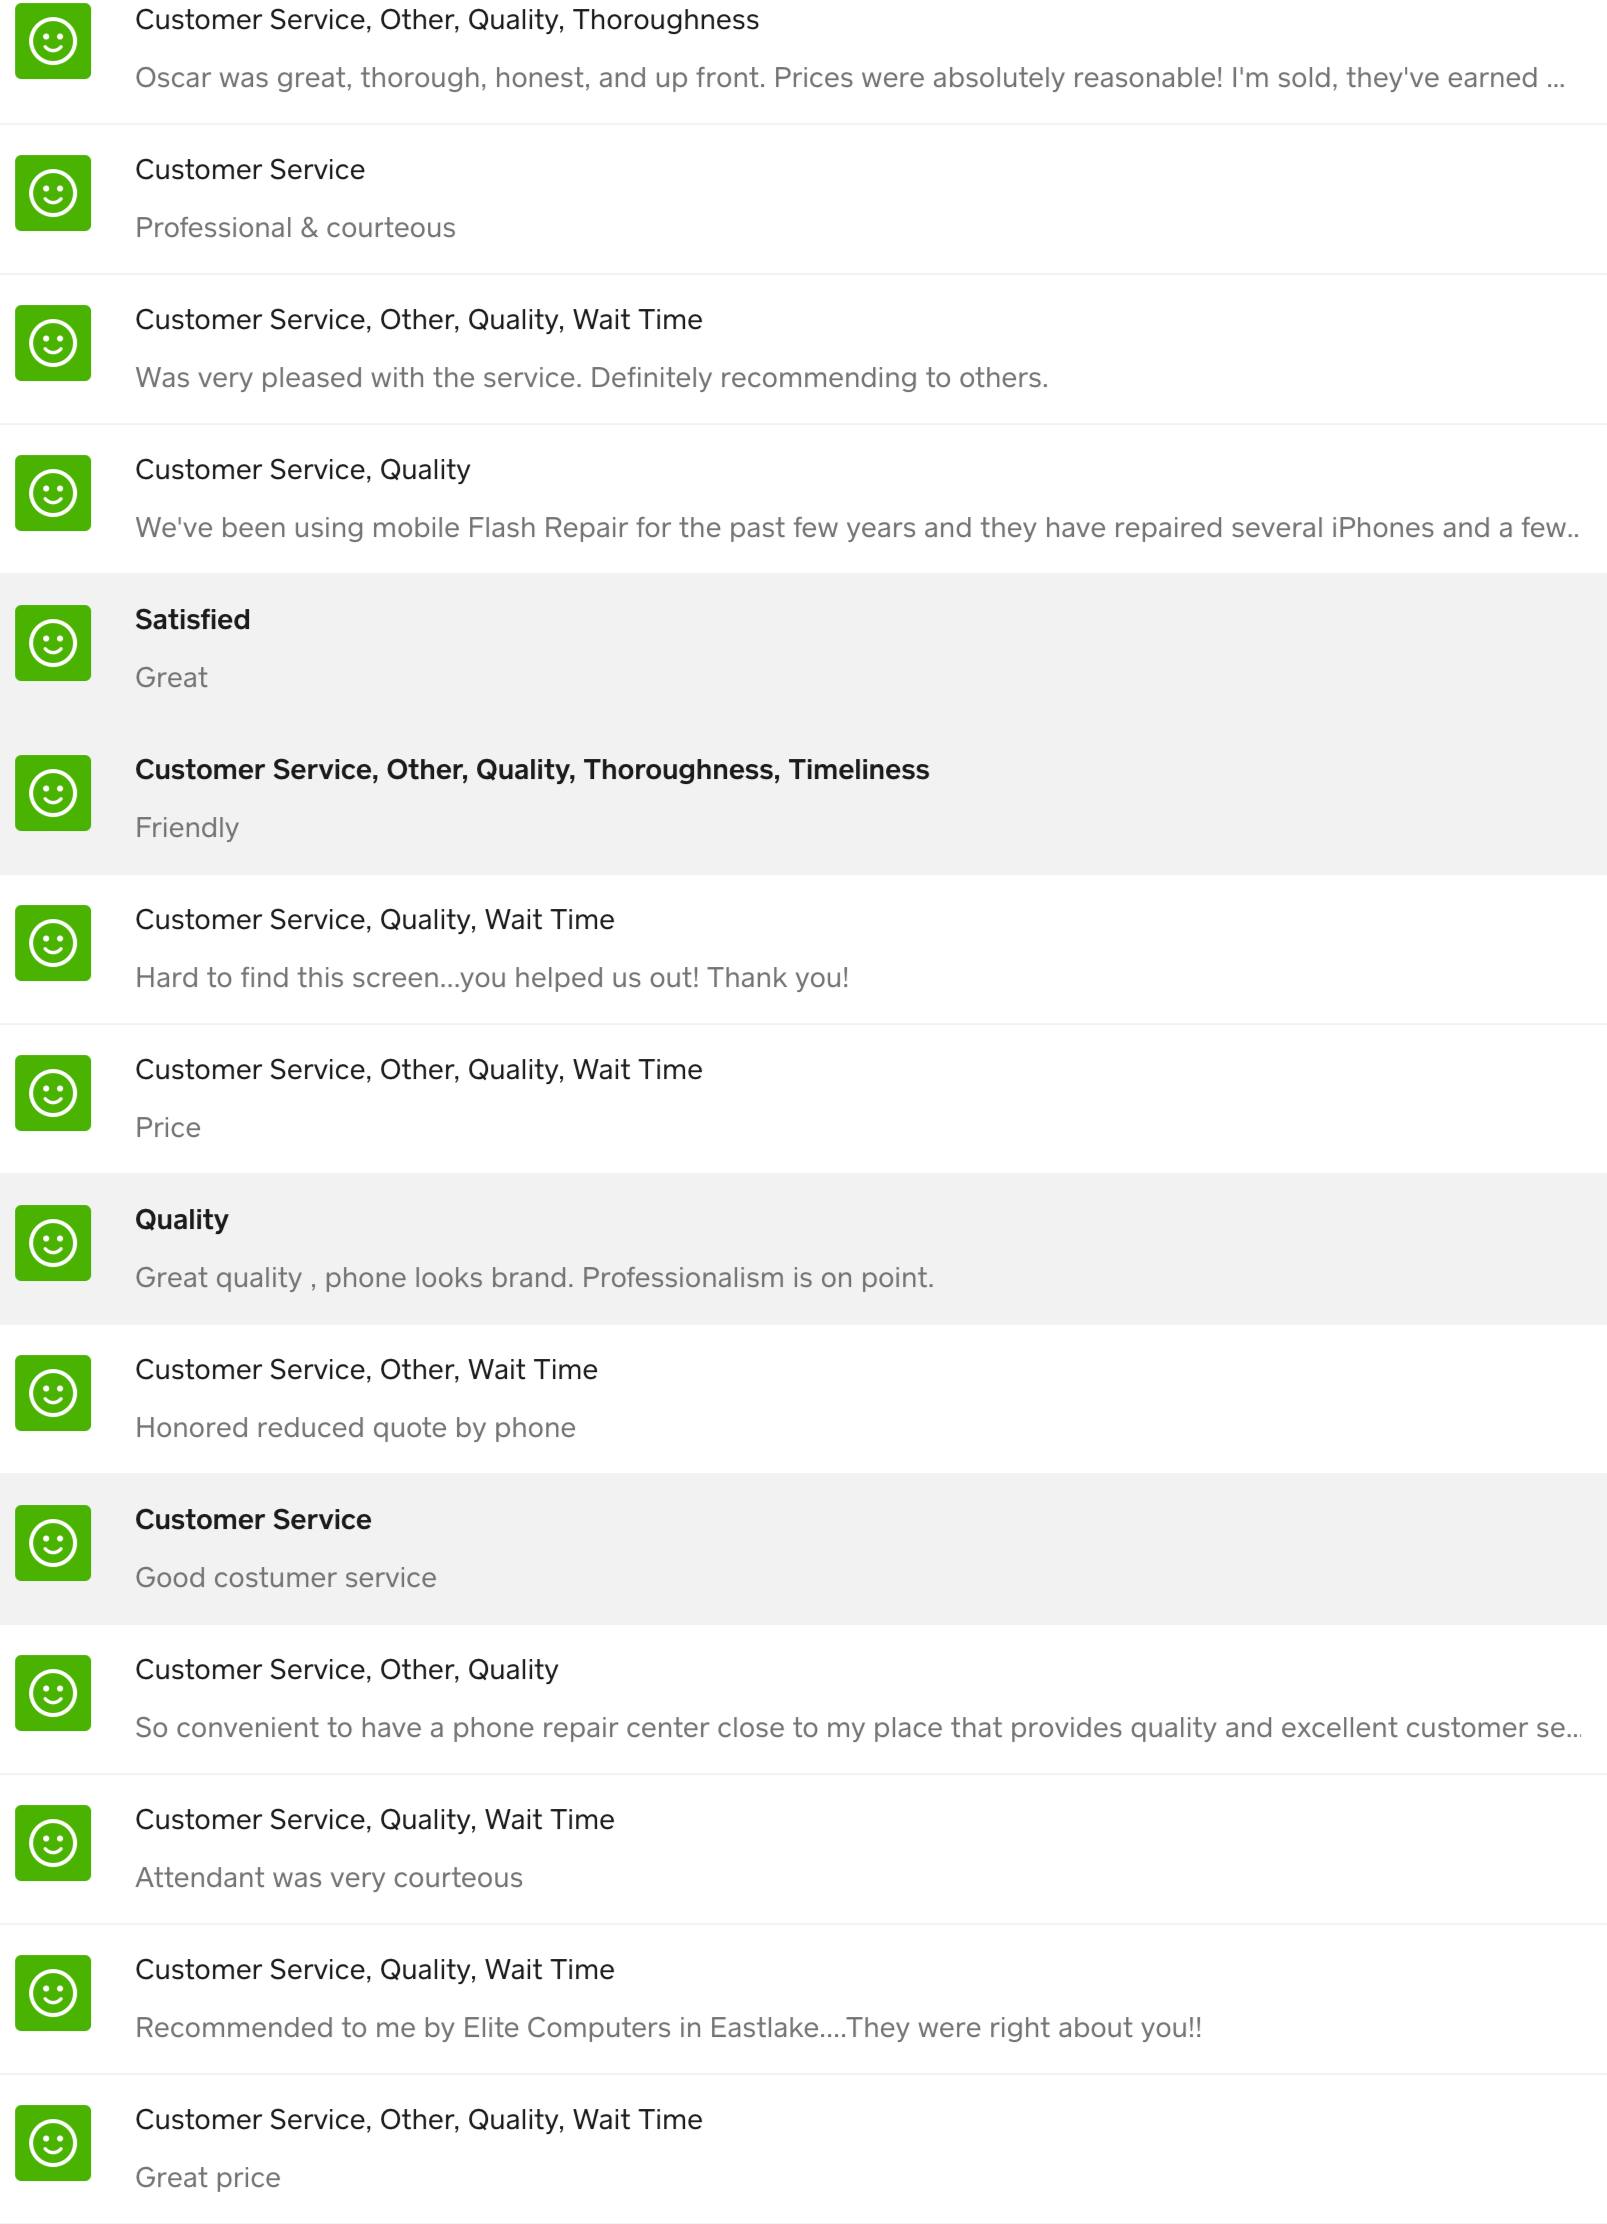 screenshot-squareup-com-dashboard-customers-feedback-1614224911491 (1).png